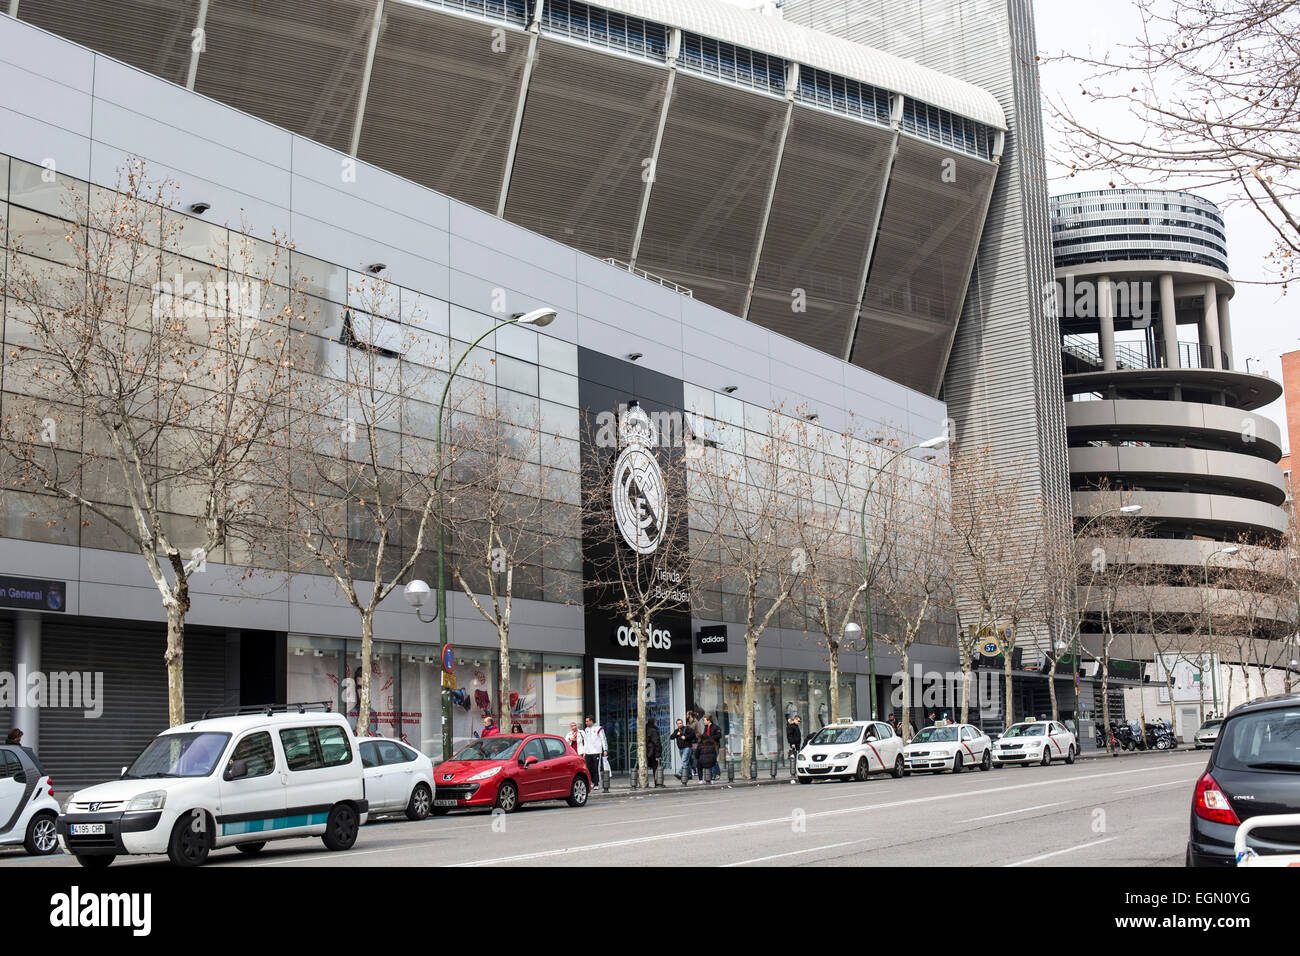 Le stade Bernabeu du Real Madrid football club boutique Banque D'Images